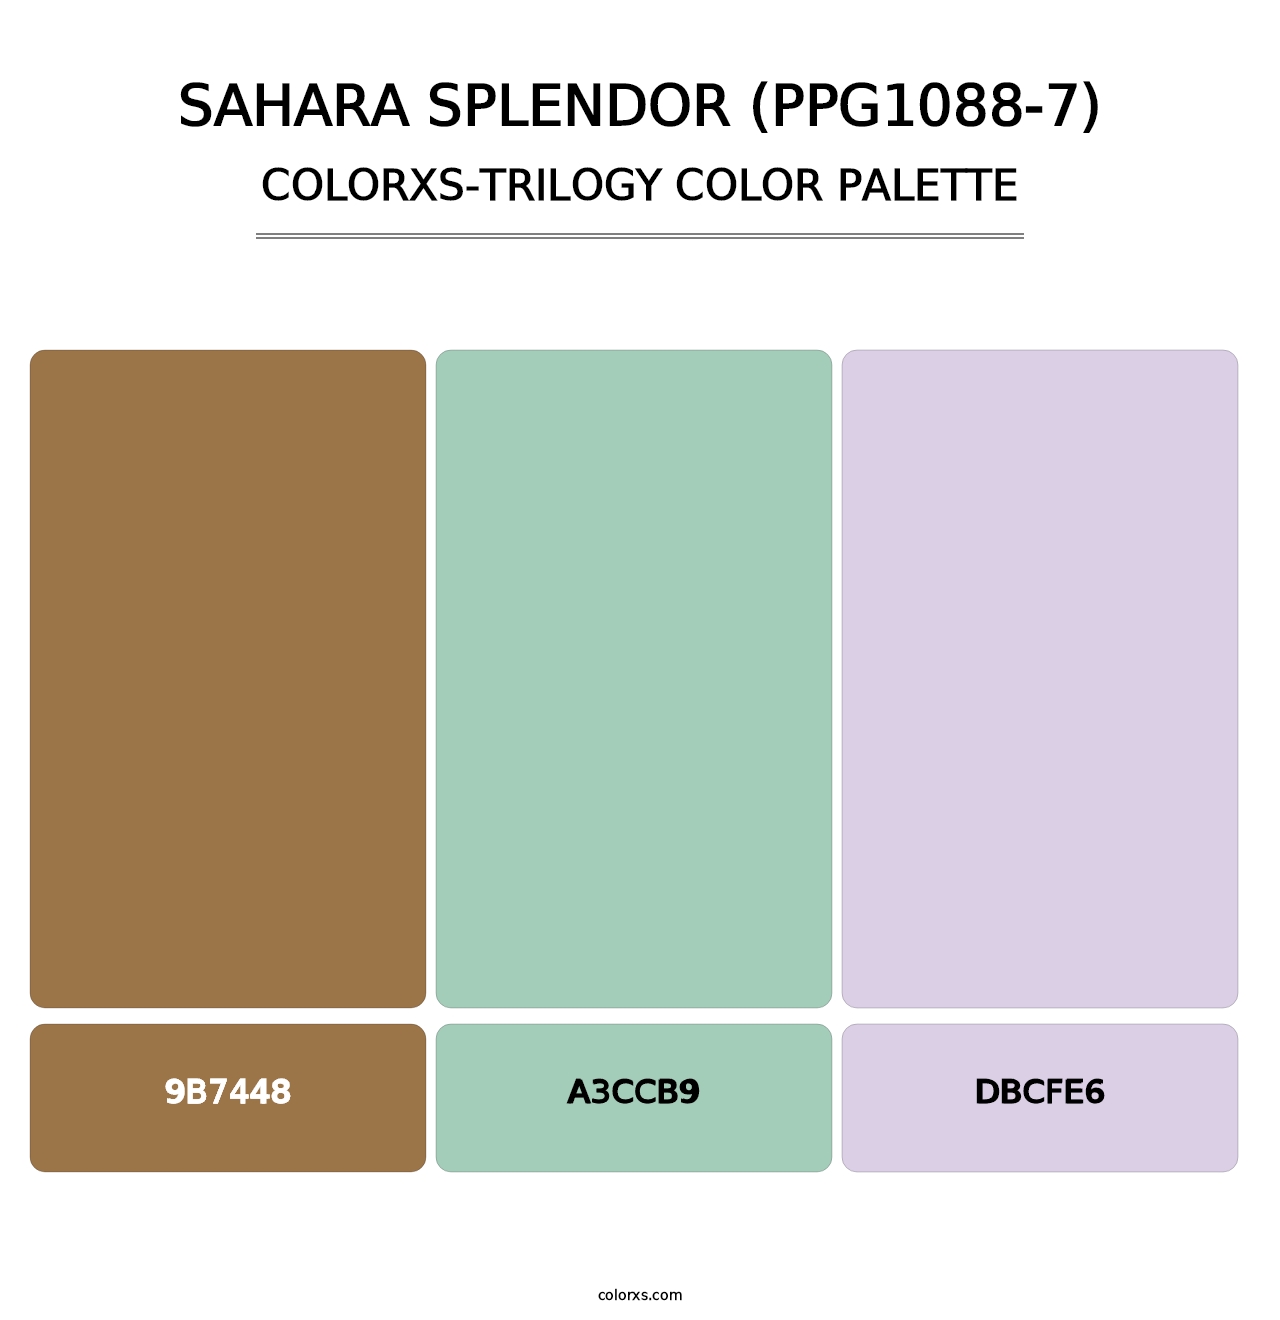 Sahara Splendor (PPG1088-7) - Colorxs Trilogy Palette